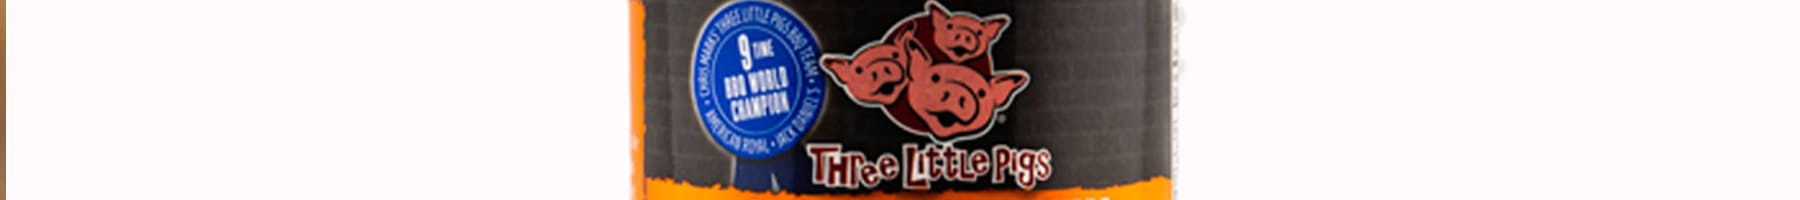 Three Little Pigs BBQ